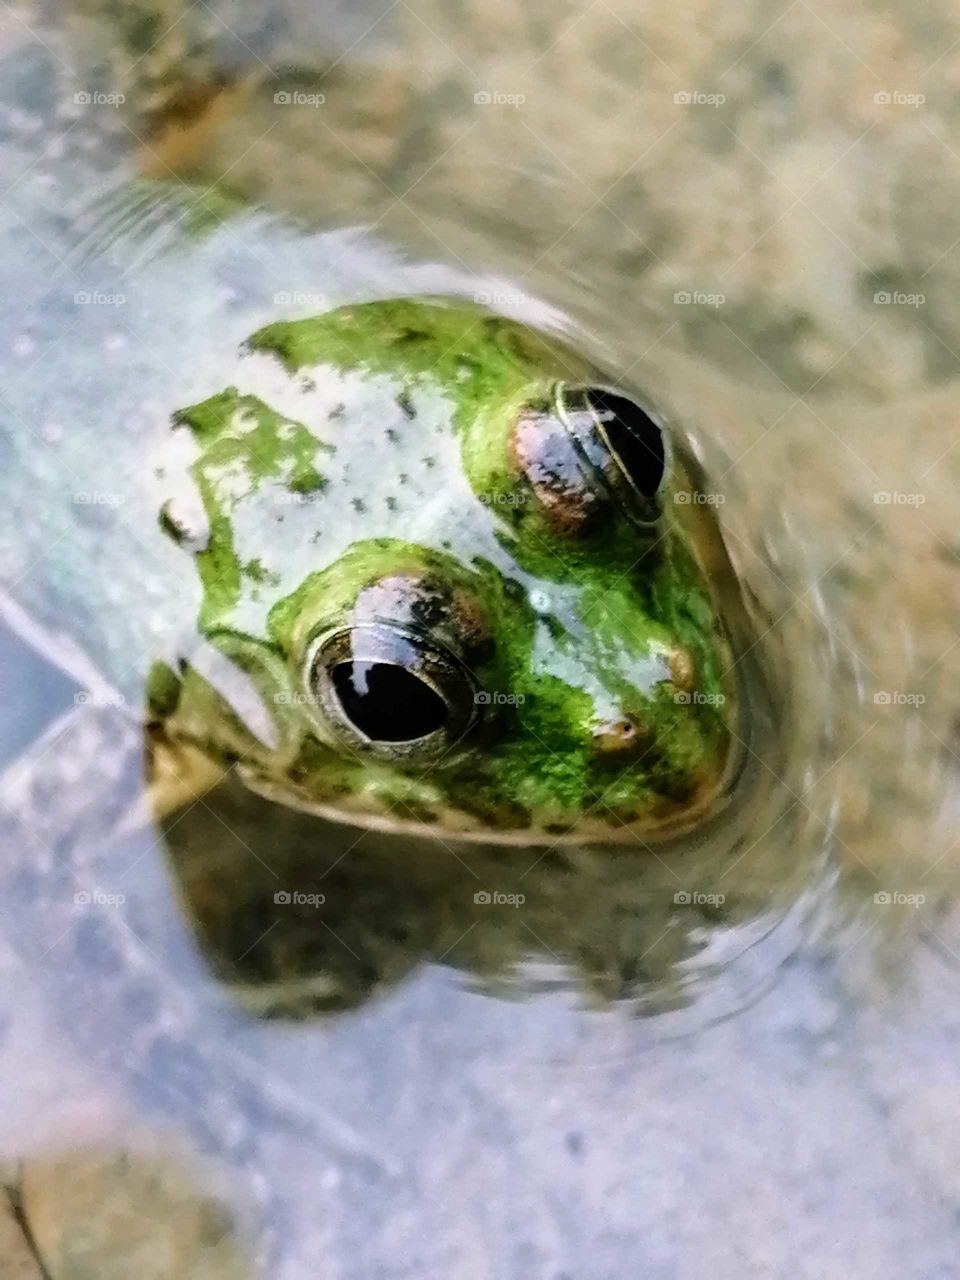 Pretty frog